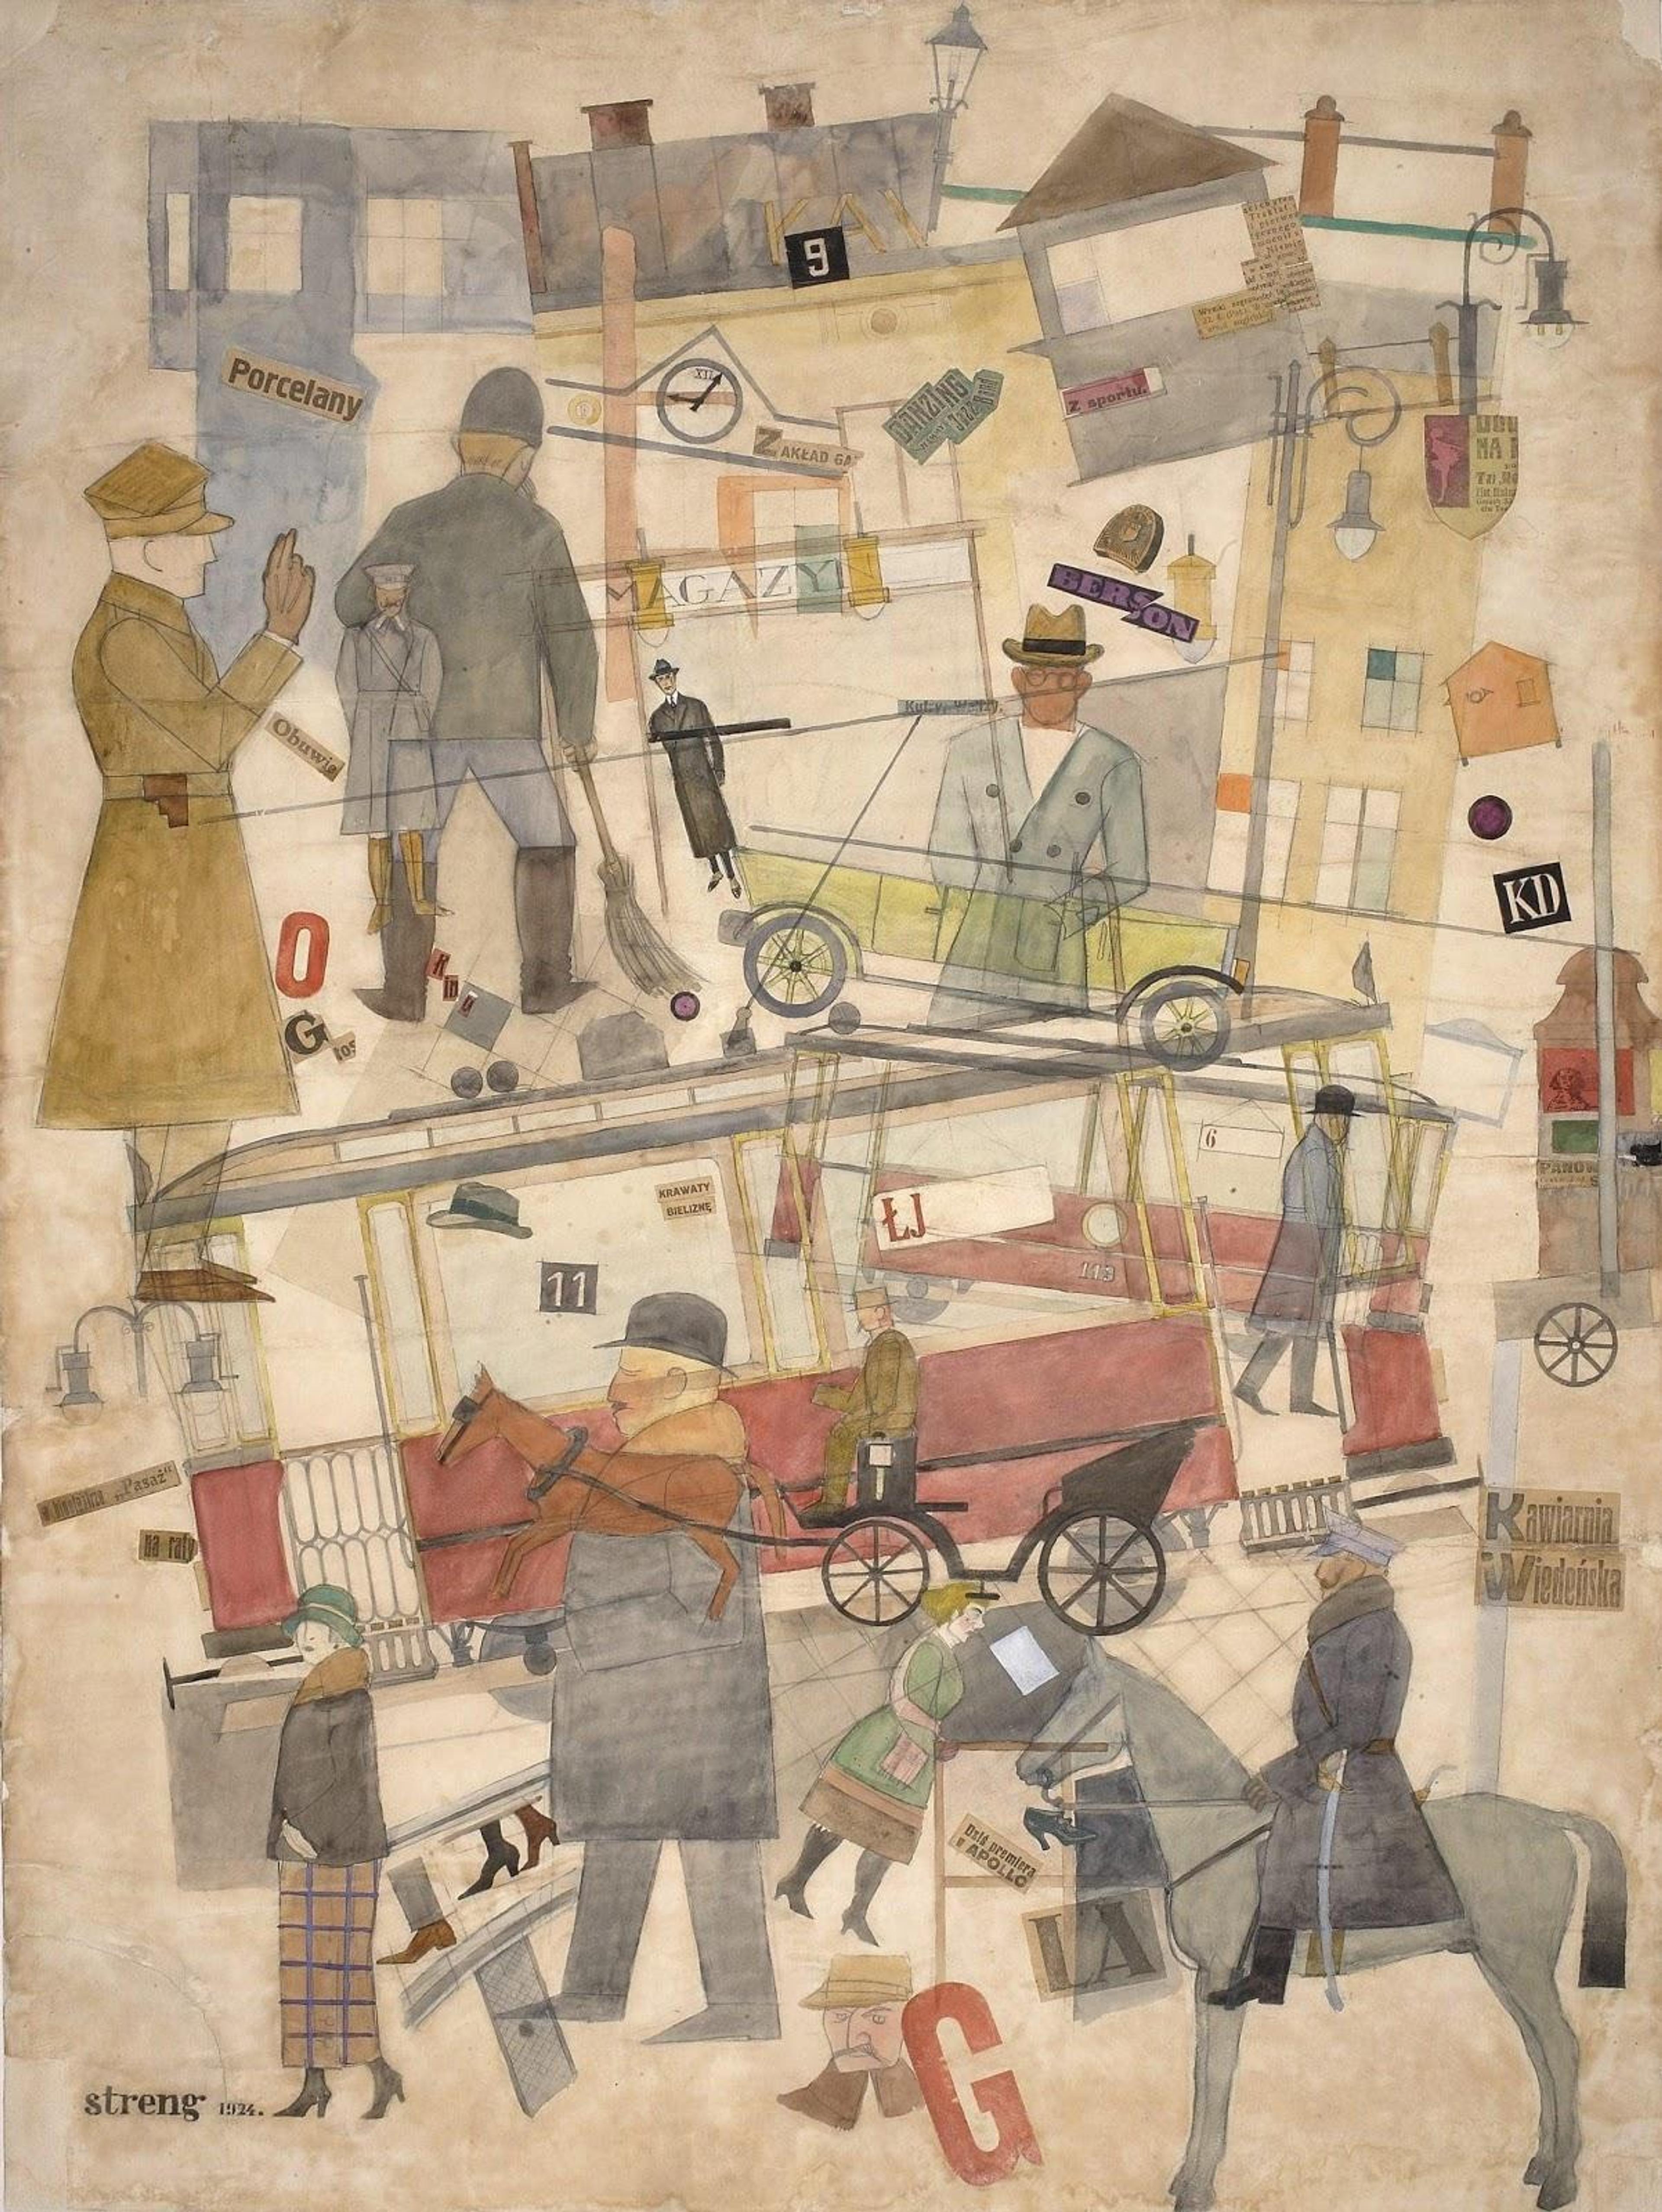 Marek Włodarski (Henryk Streng), Ulica (Street), 1924, watercolor, paper, cardboard